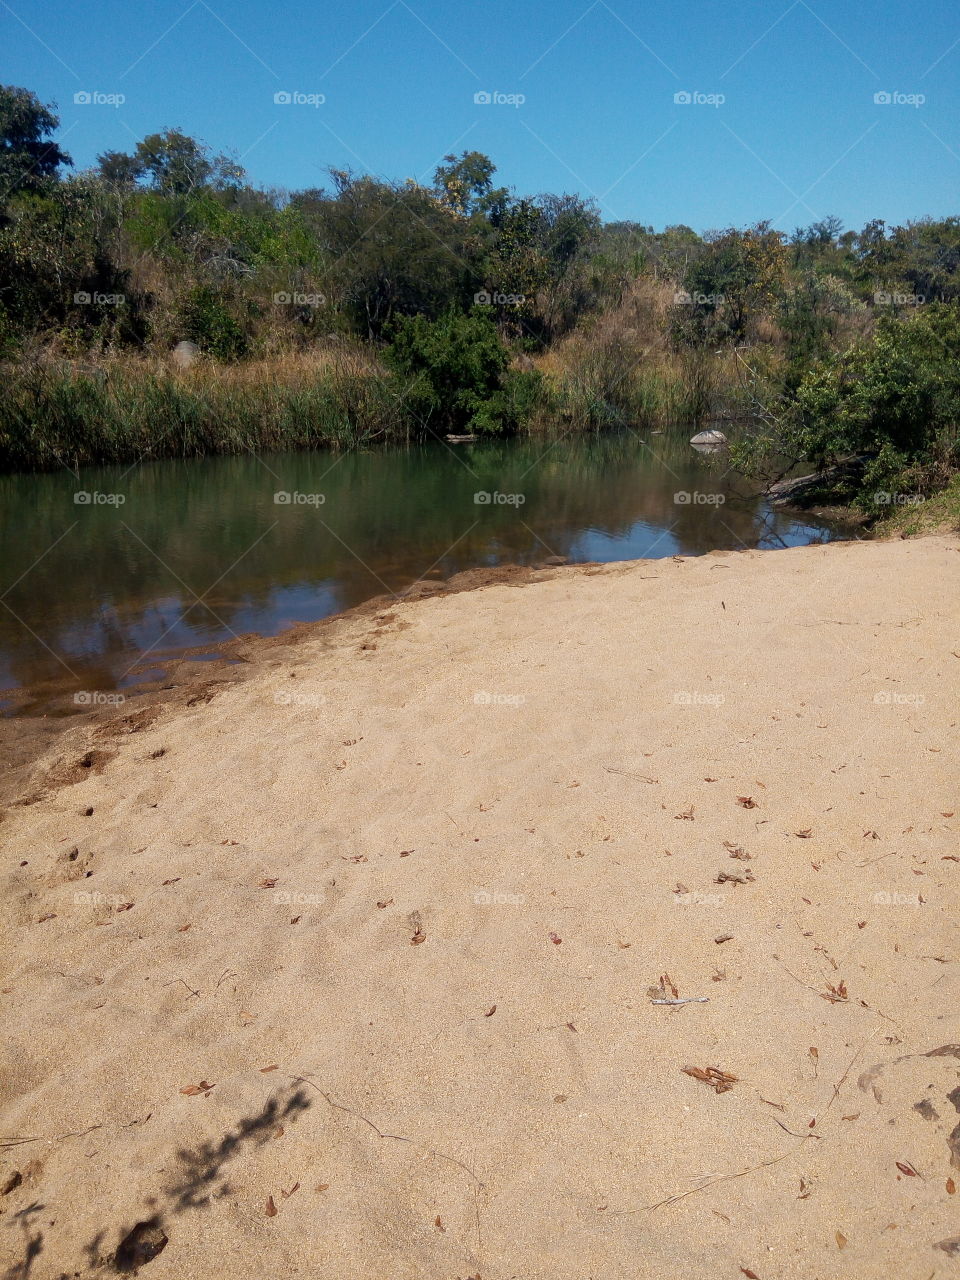 River bank and sand